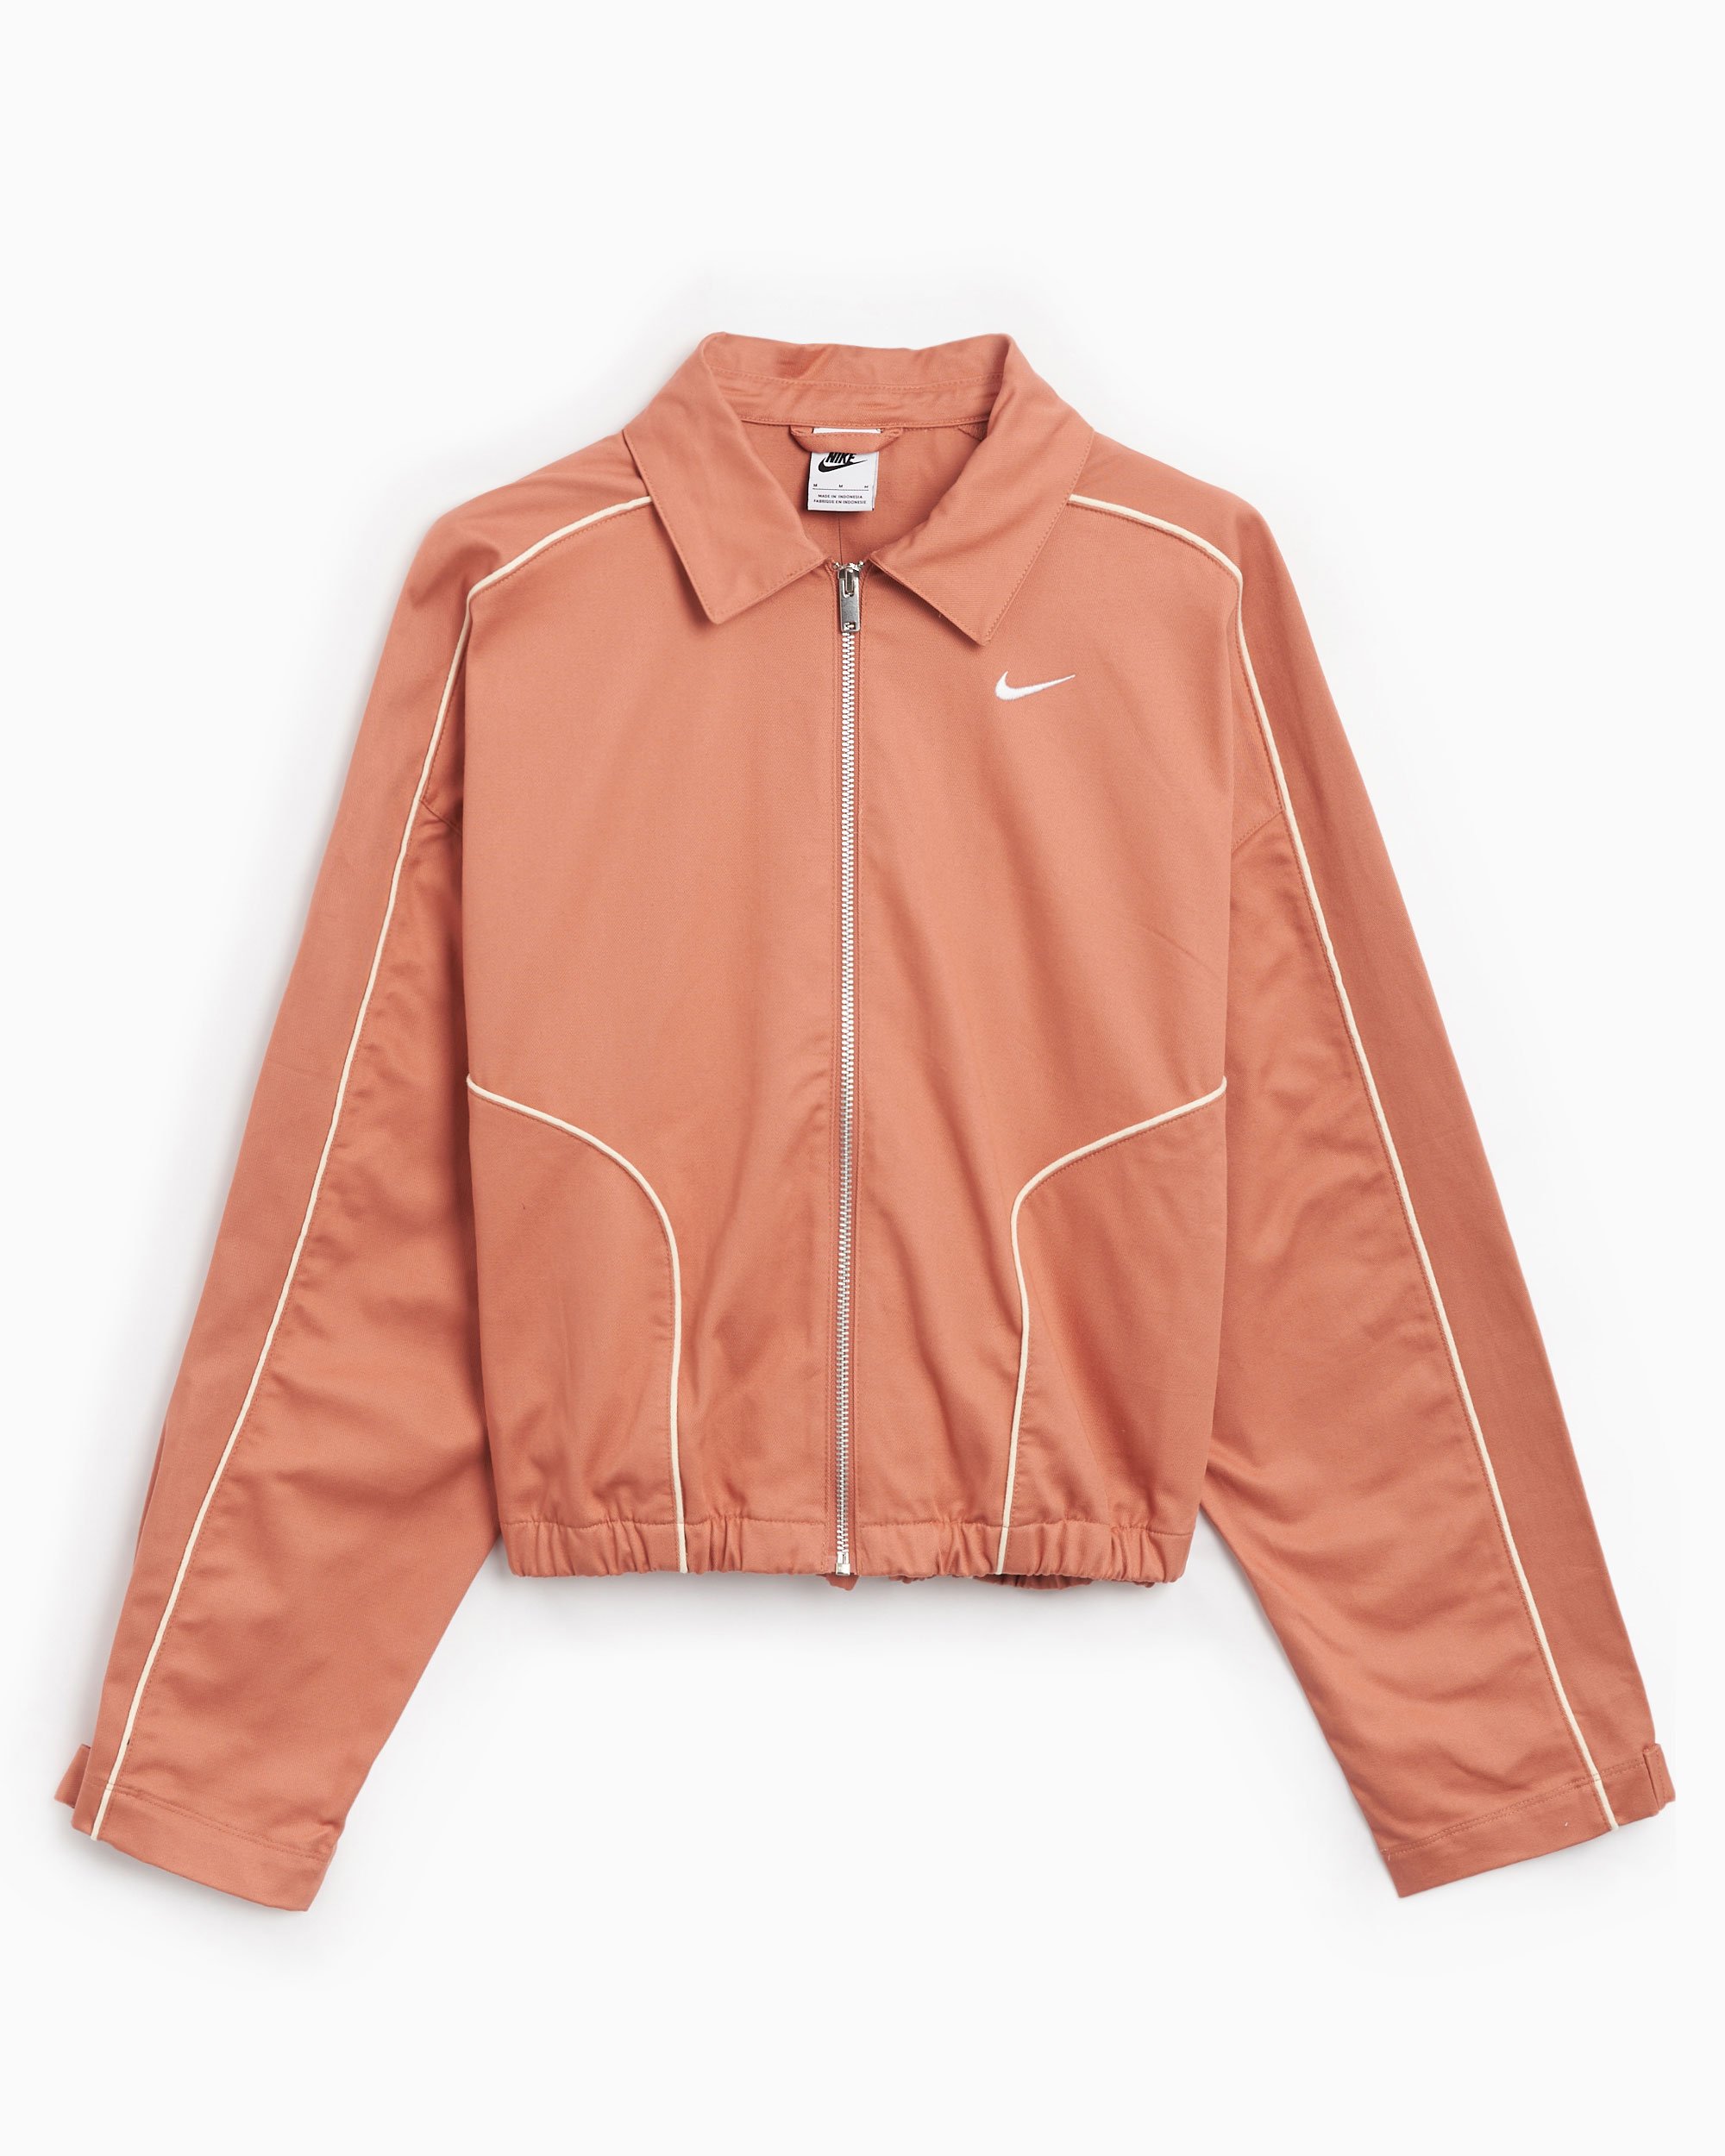 Fitted Warm-Up Jackets – GK Elite Sportswear